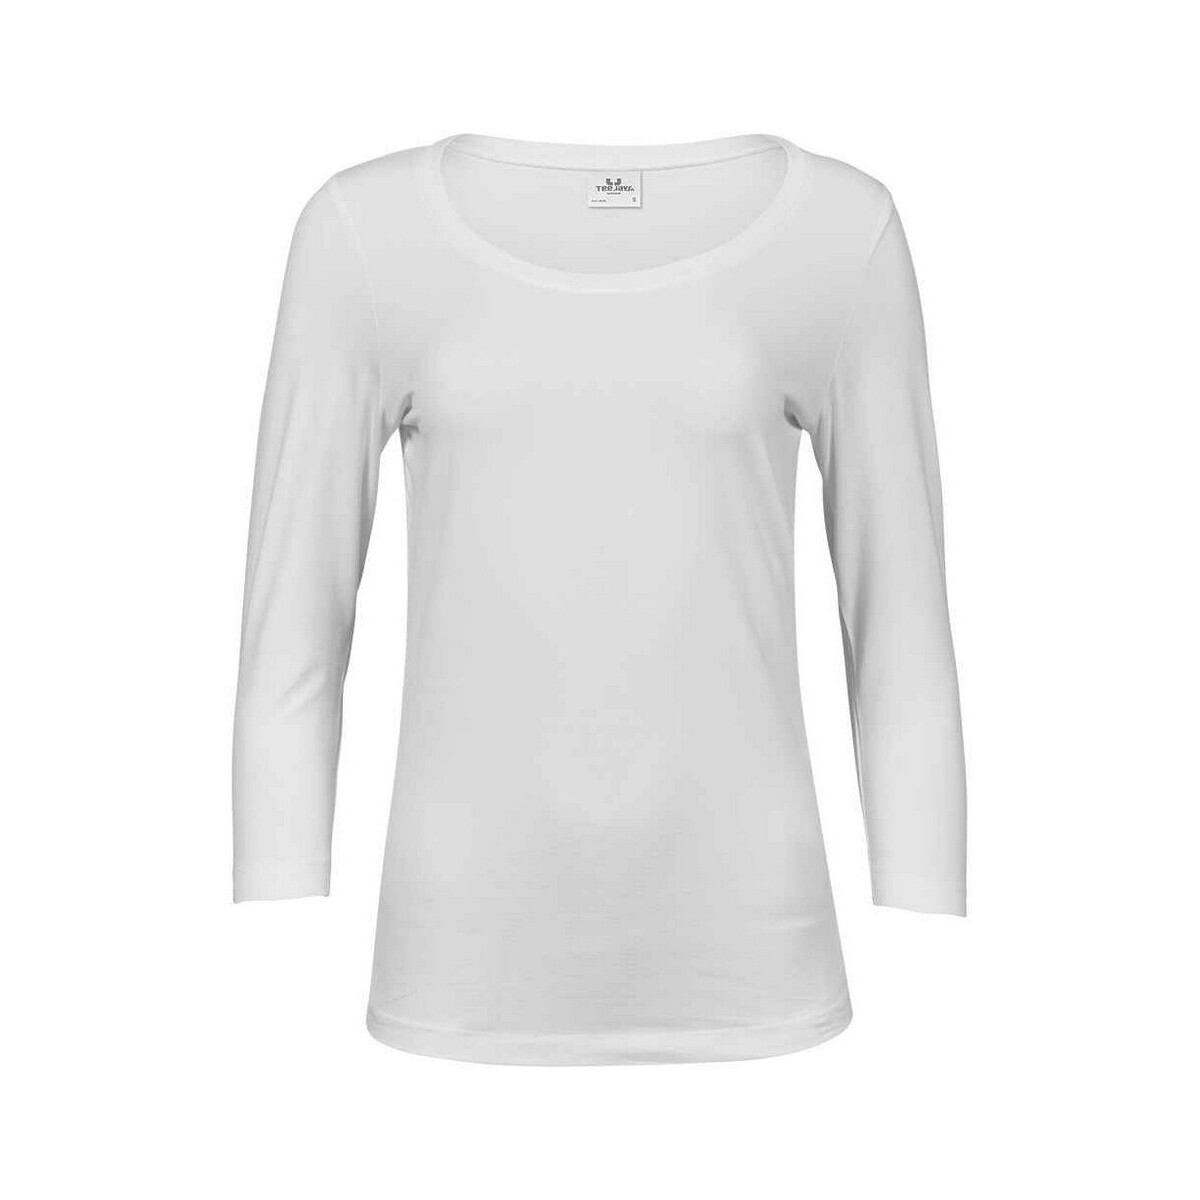 Abbigliamento Donna T-shirts a maniche lunghe Tee Jays PC5238 Bianco